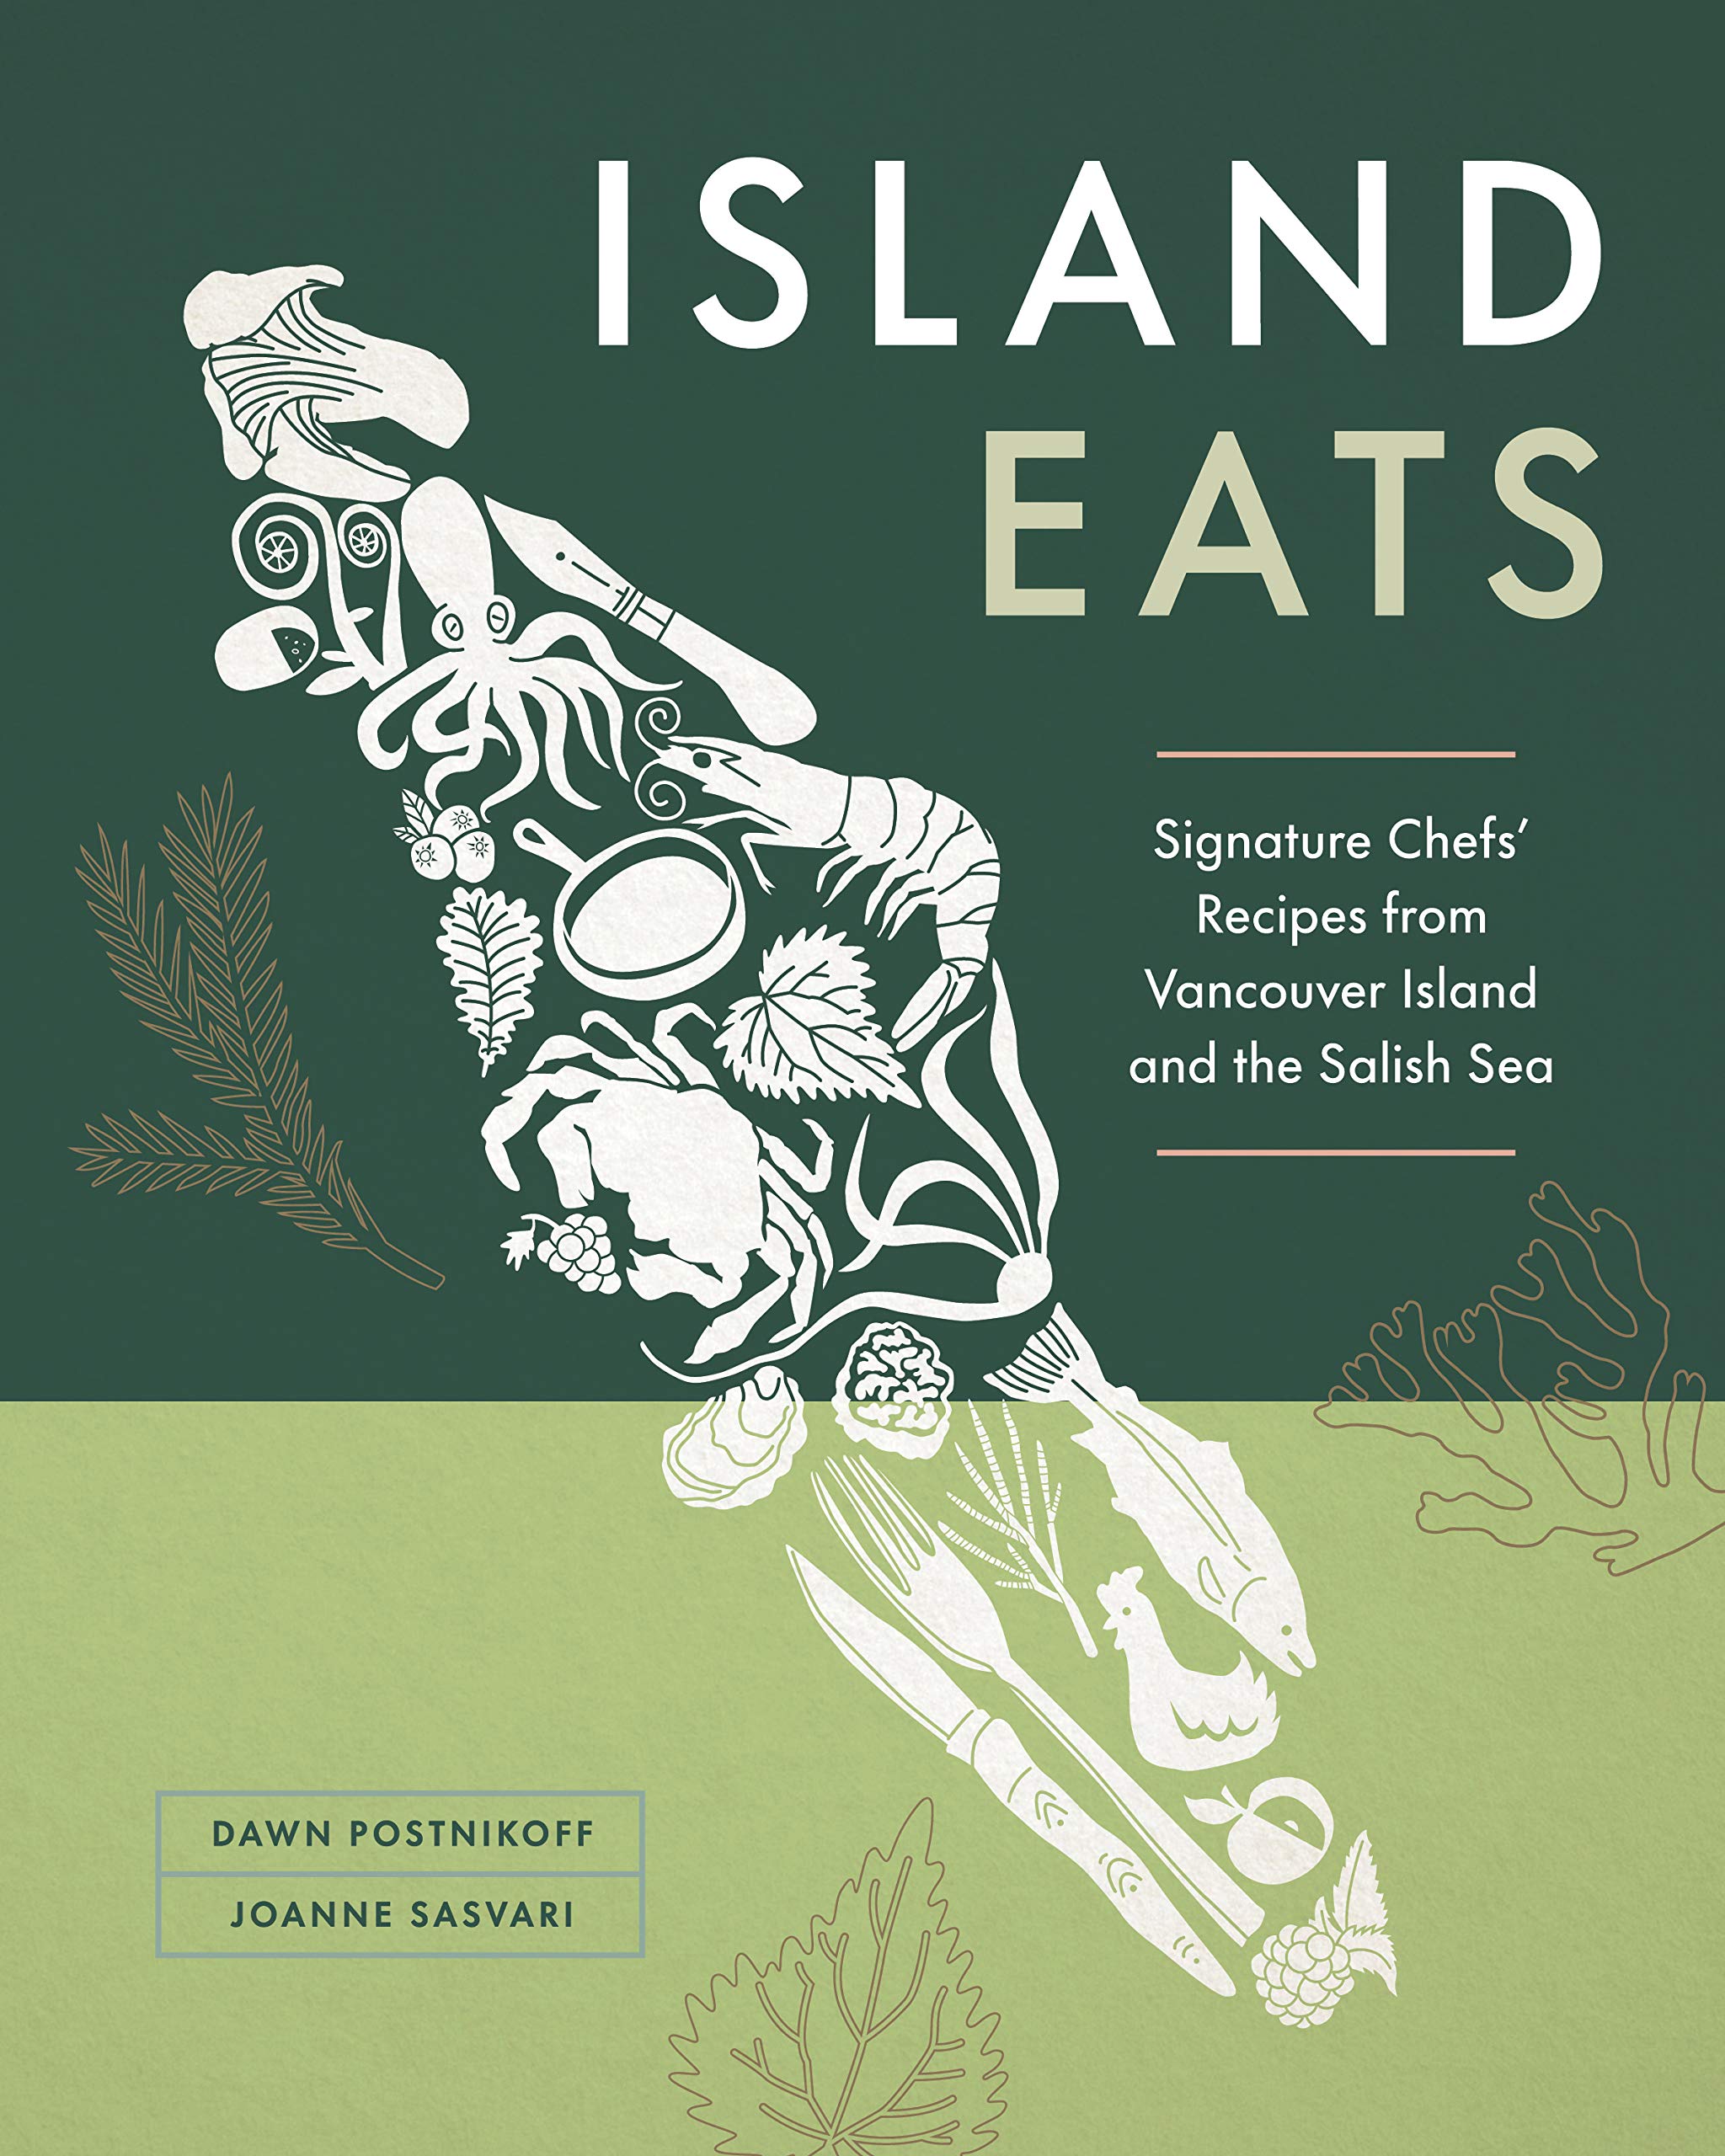 Island Eats: Signature Chefs’ Recipes from Vancouver Island and the Salish Sea (Dawn Postnikoff, Joanne Sasvari)